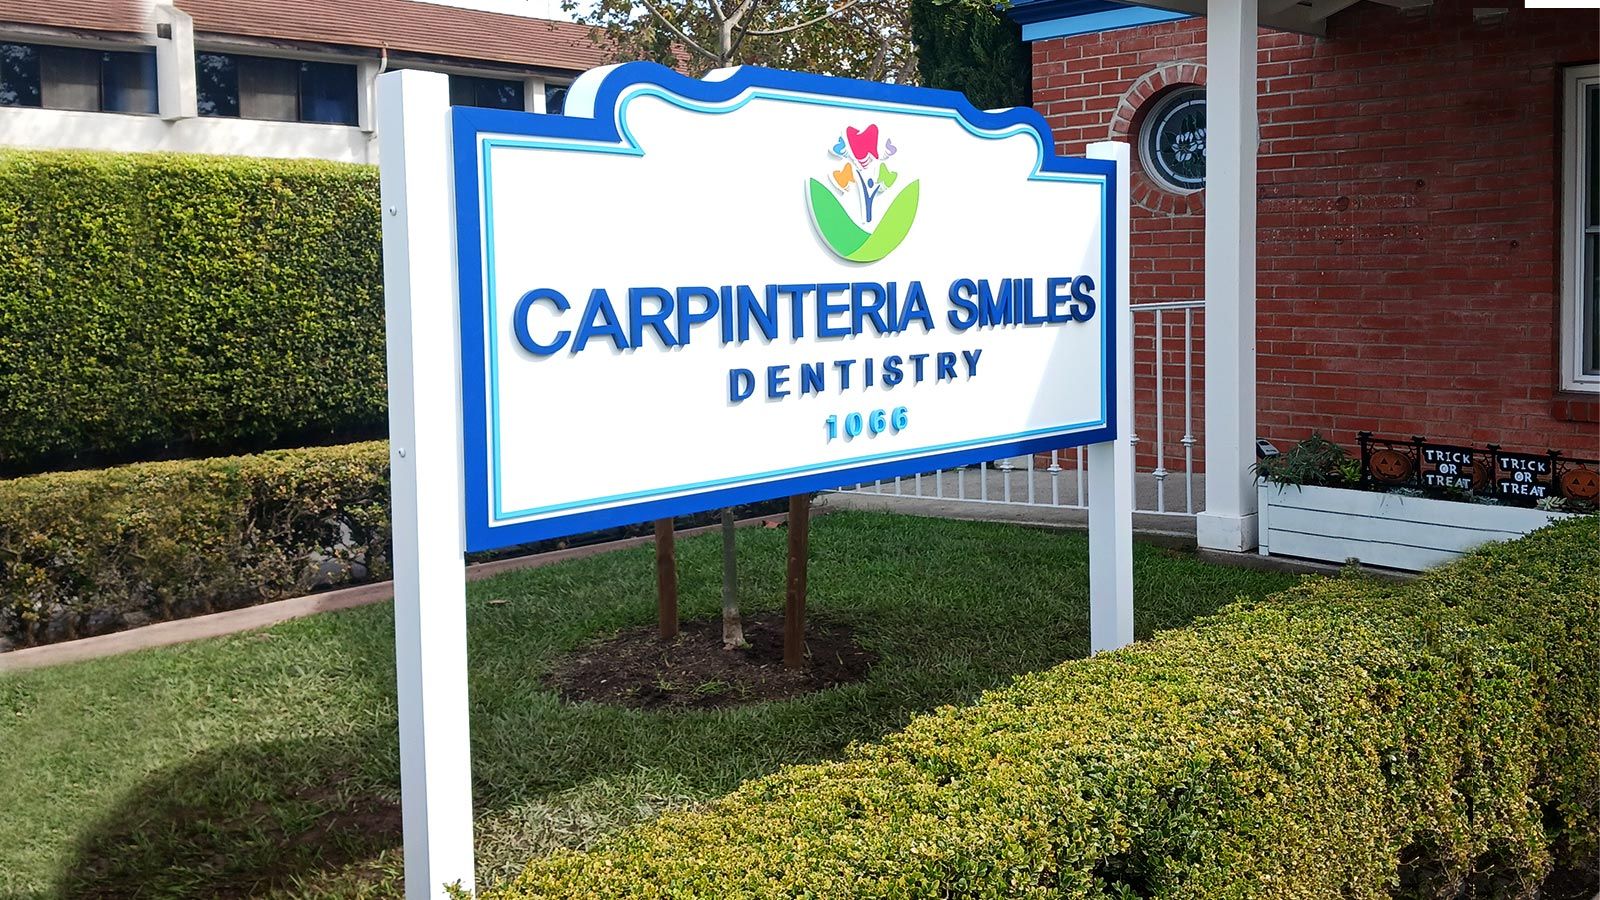 Carpinteria Smiles Dentistry yard sign for branding